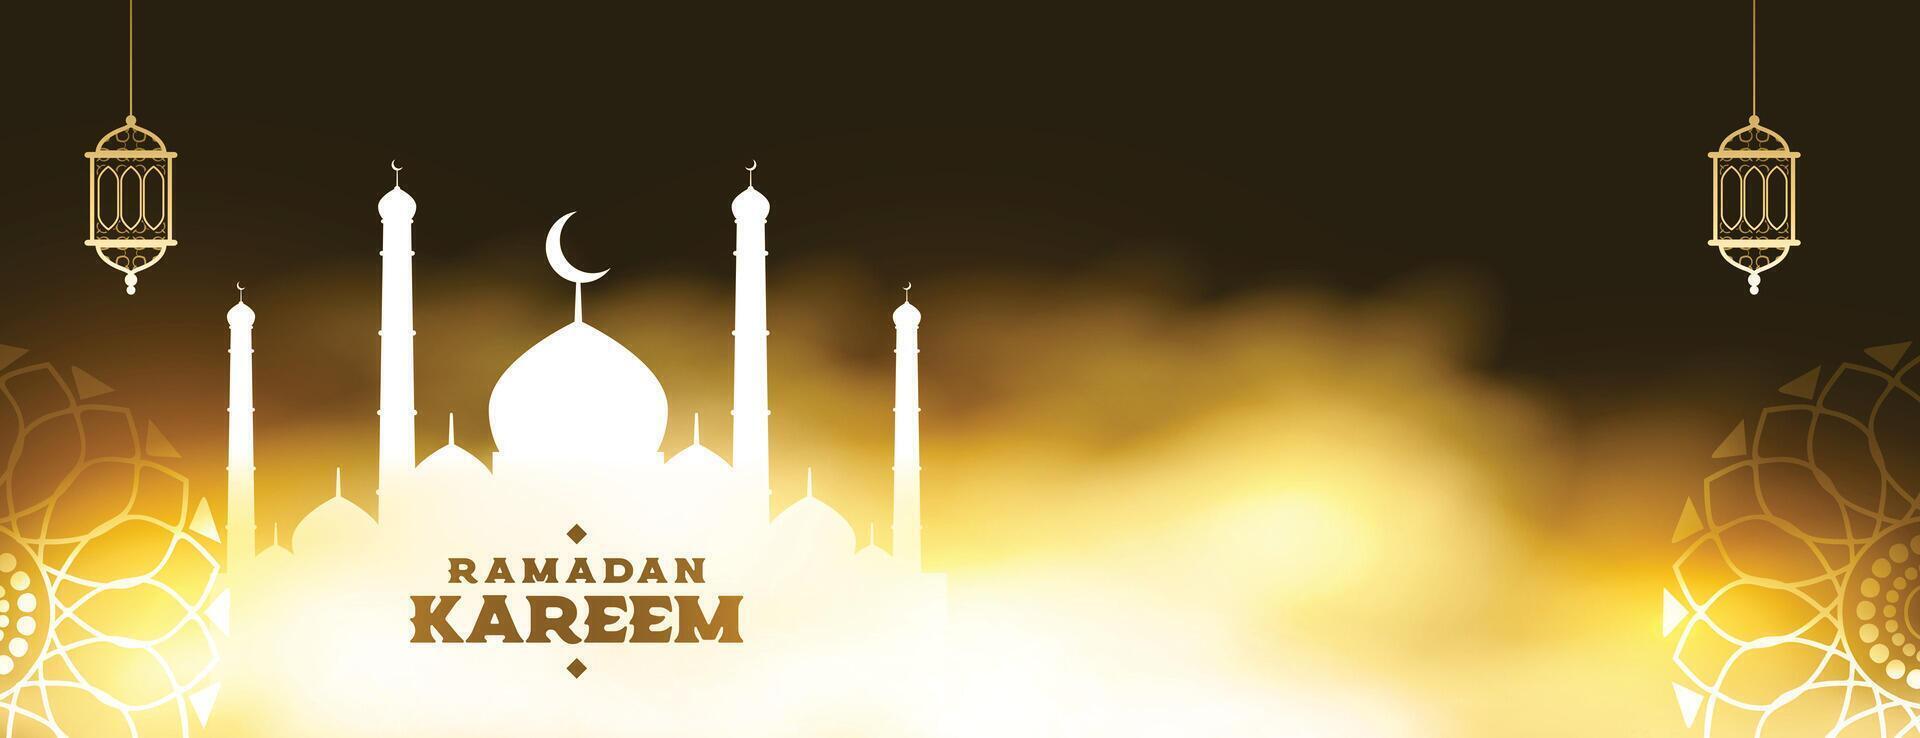 islamic ramadan kareem arabic banner with mosque and lanterns vector